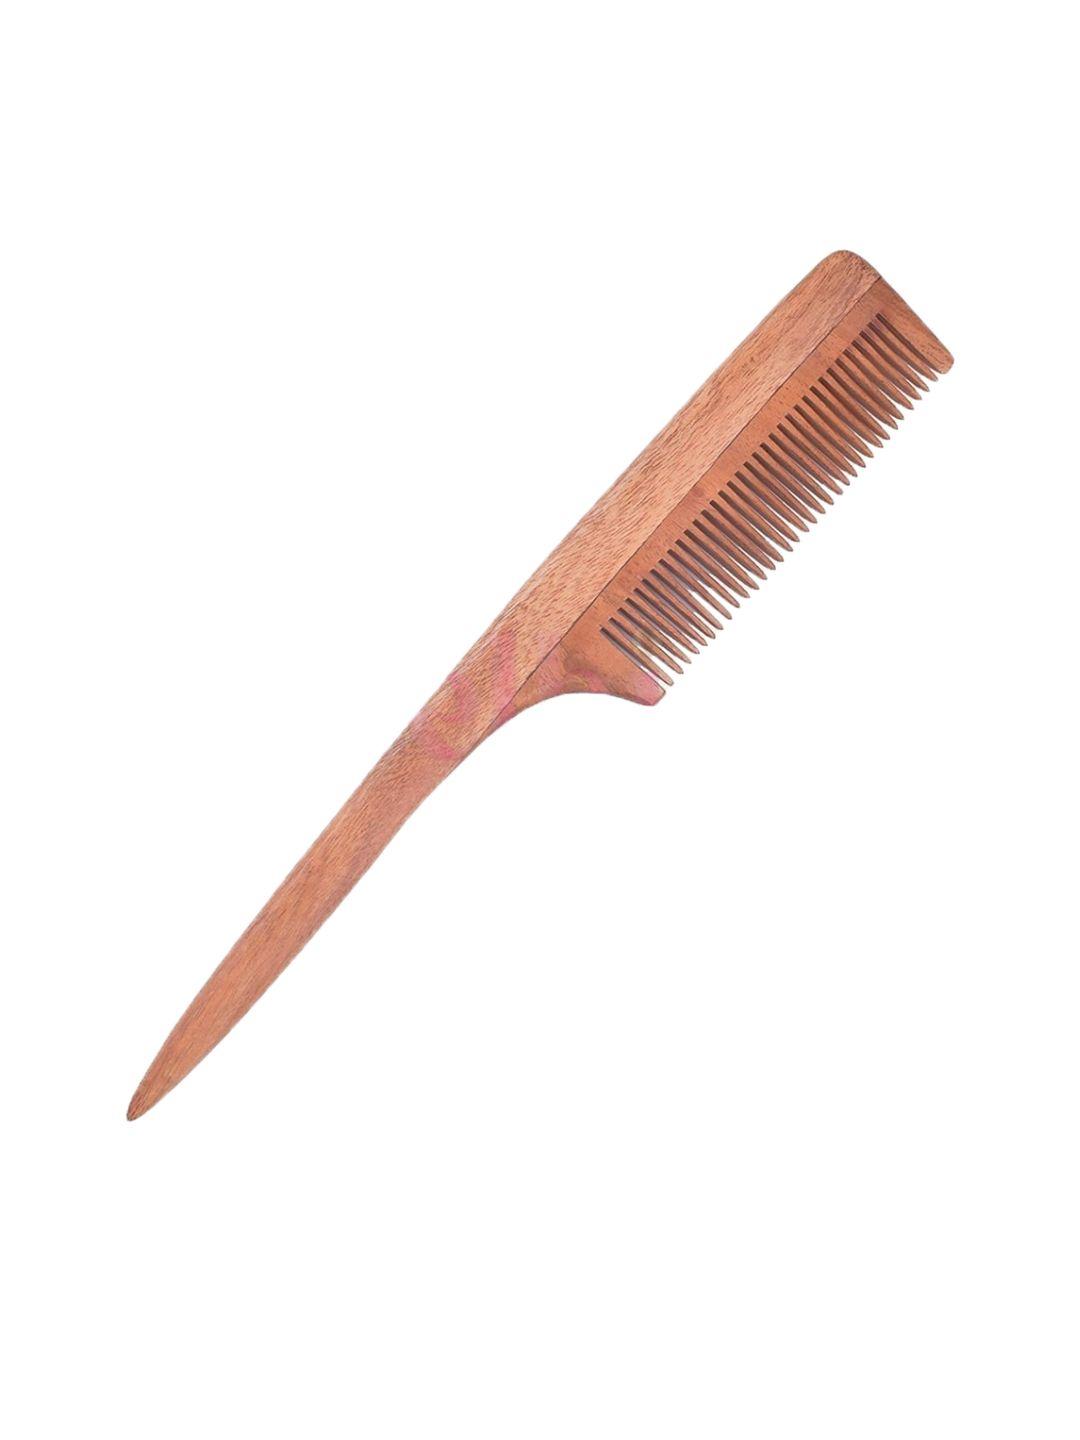 feelhigh neem wood fine & thin tooth rat tail comb - brown